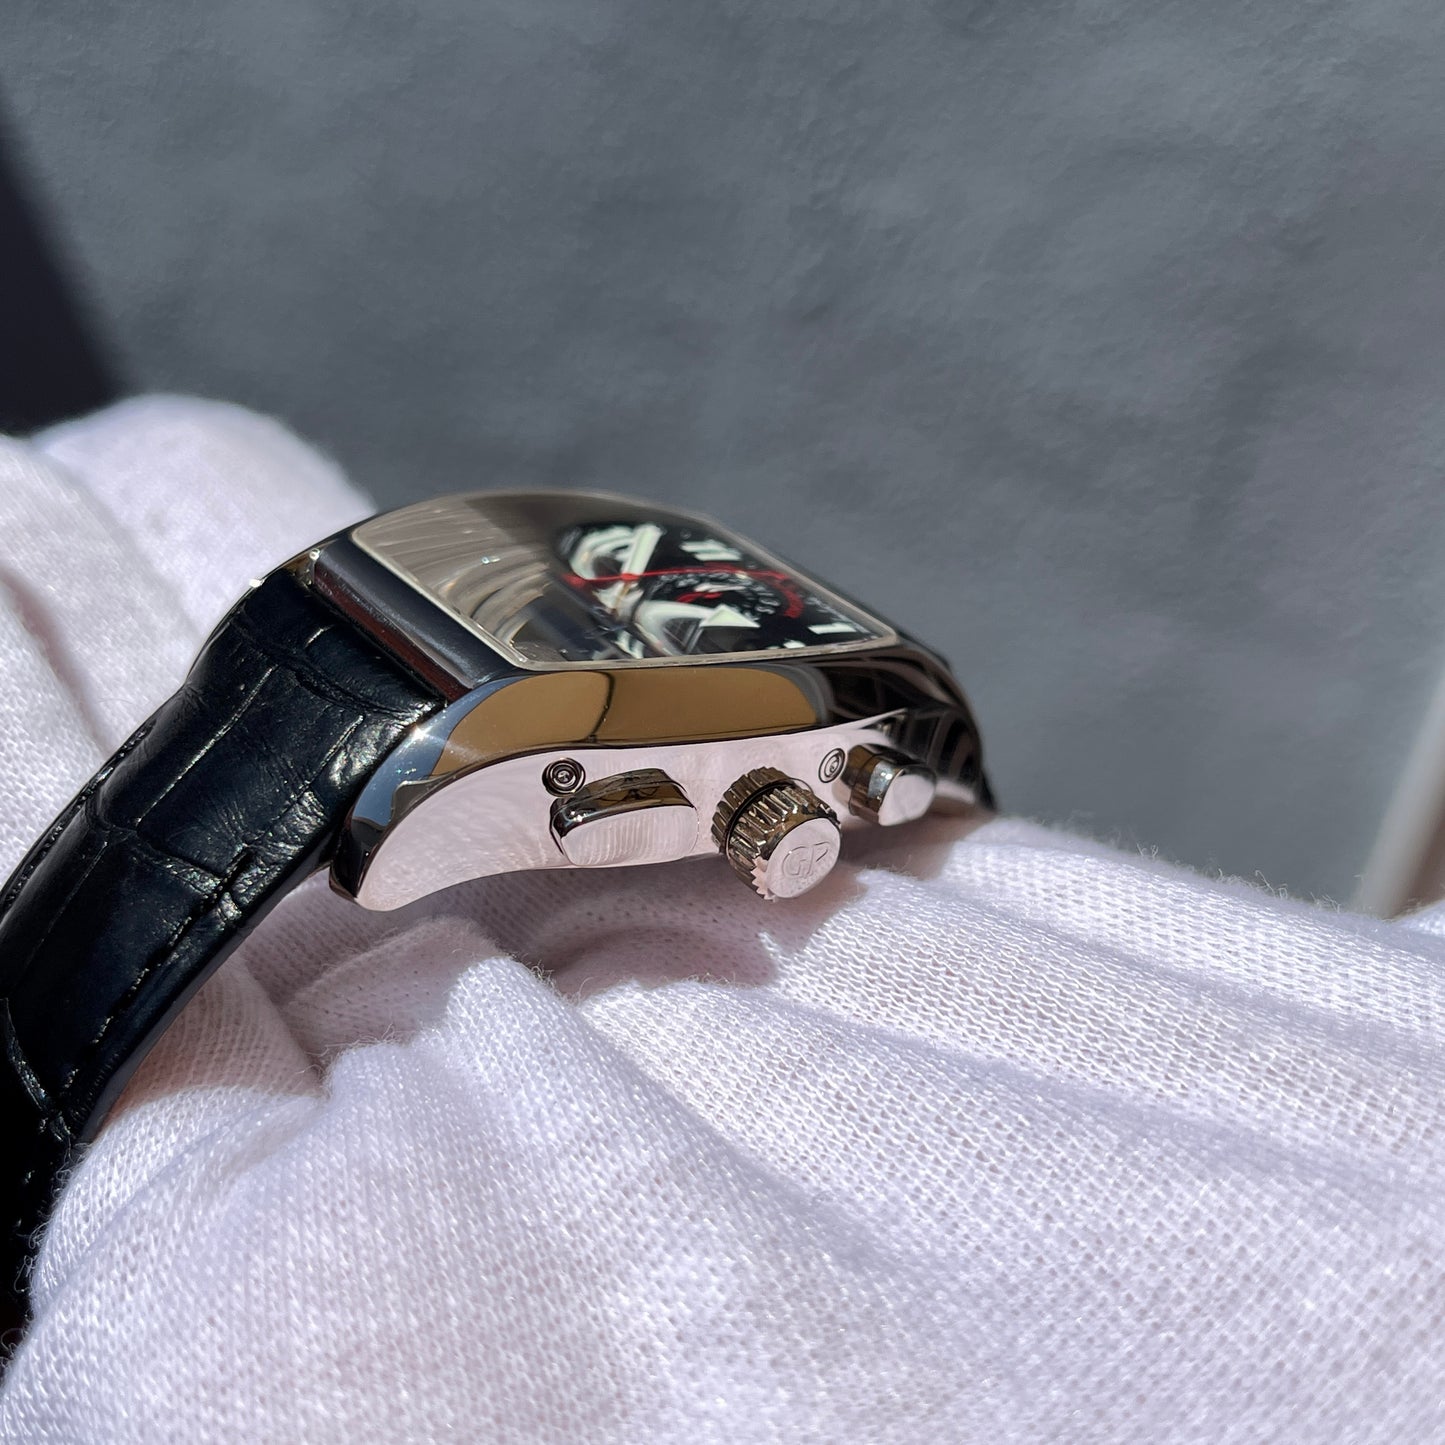 Girard Perregaux Ferrari 250 GTO LMB 1 of 1 18k White Gold Perpetual Calendar Chronograph Wristwatch - Hashtag Watch Company